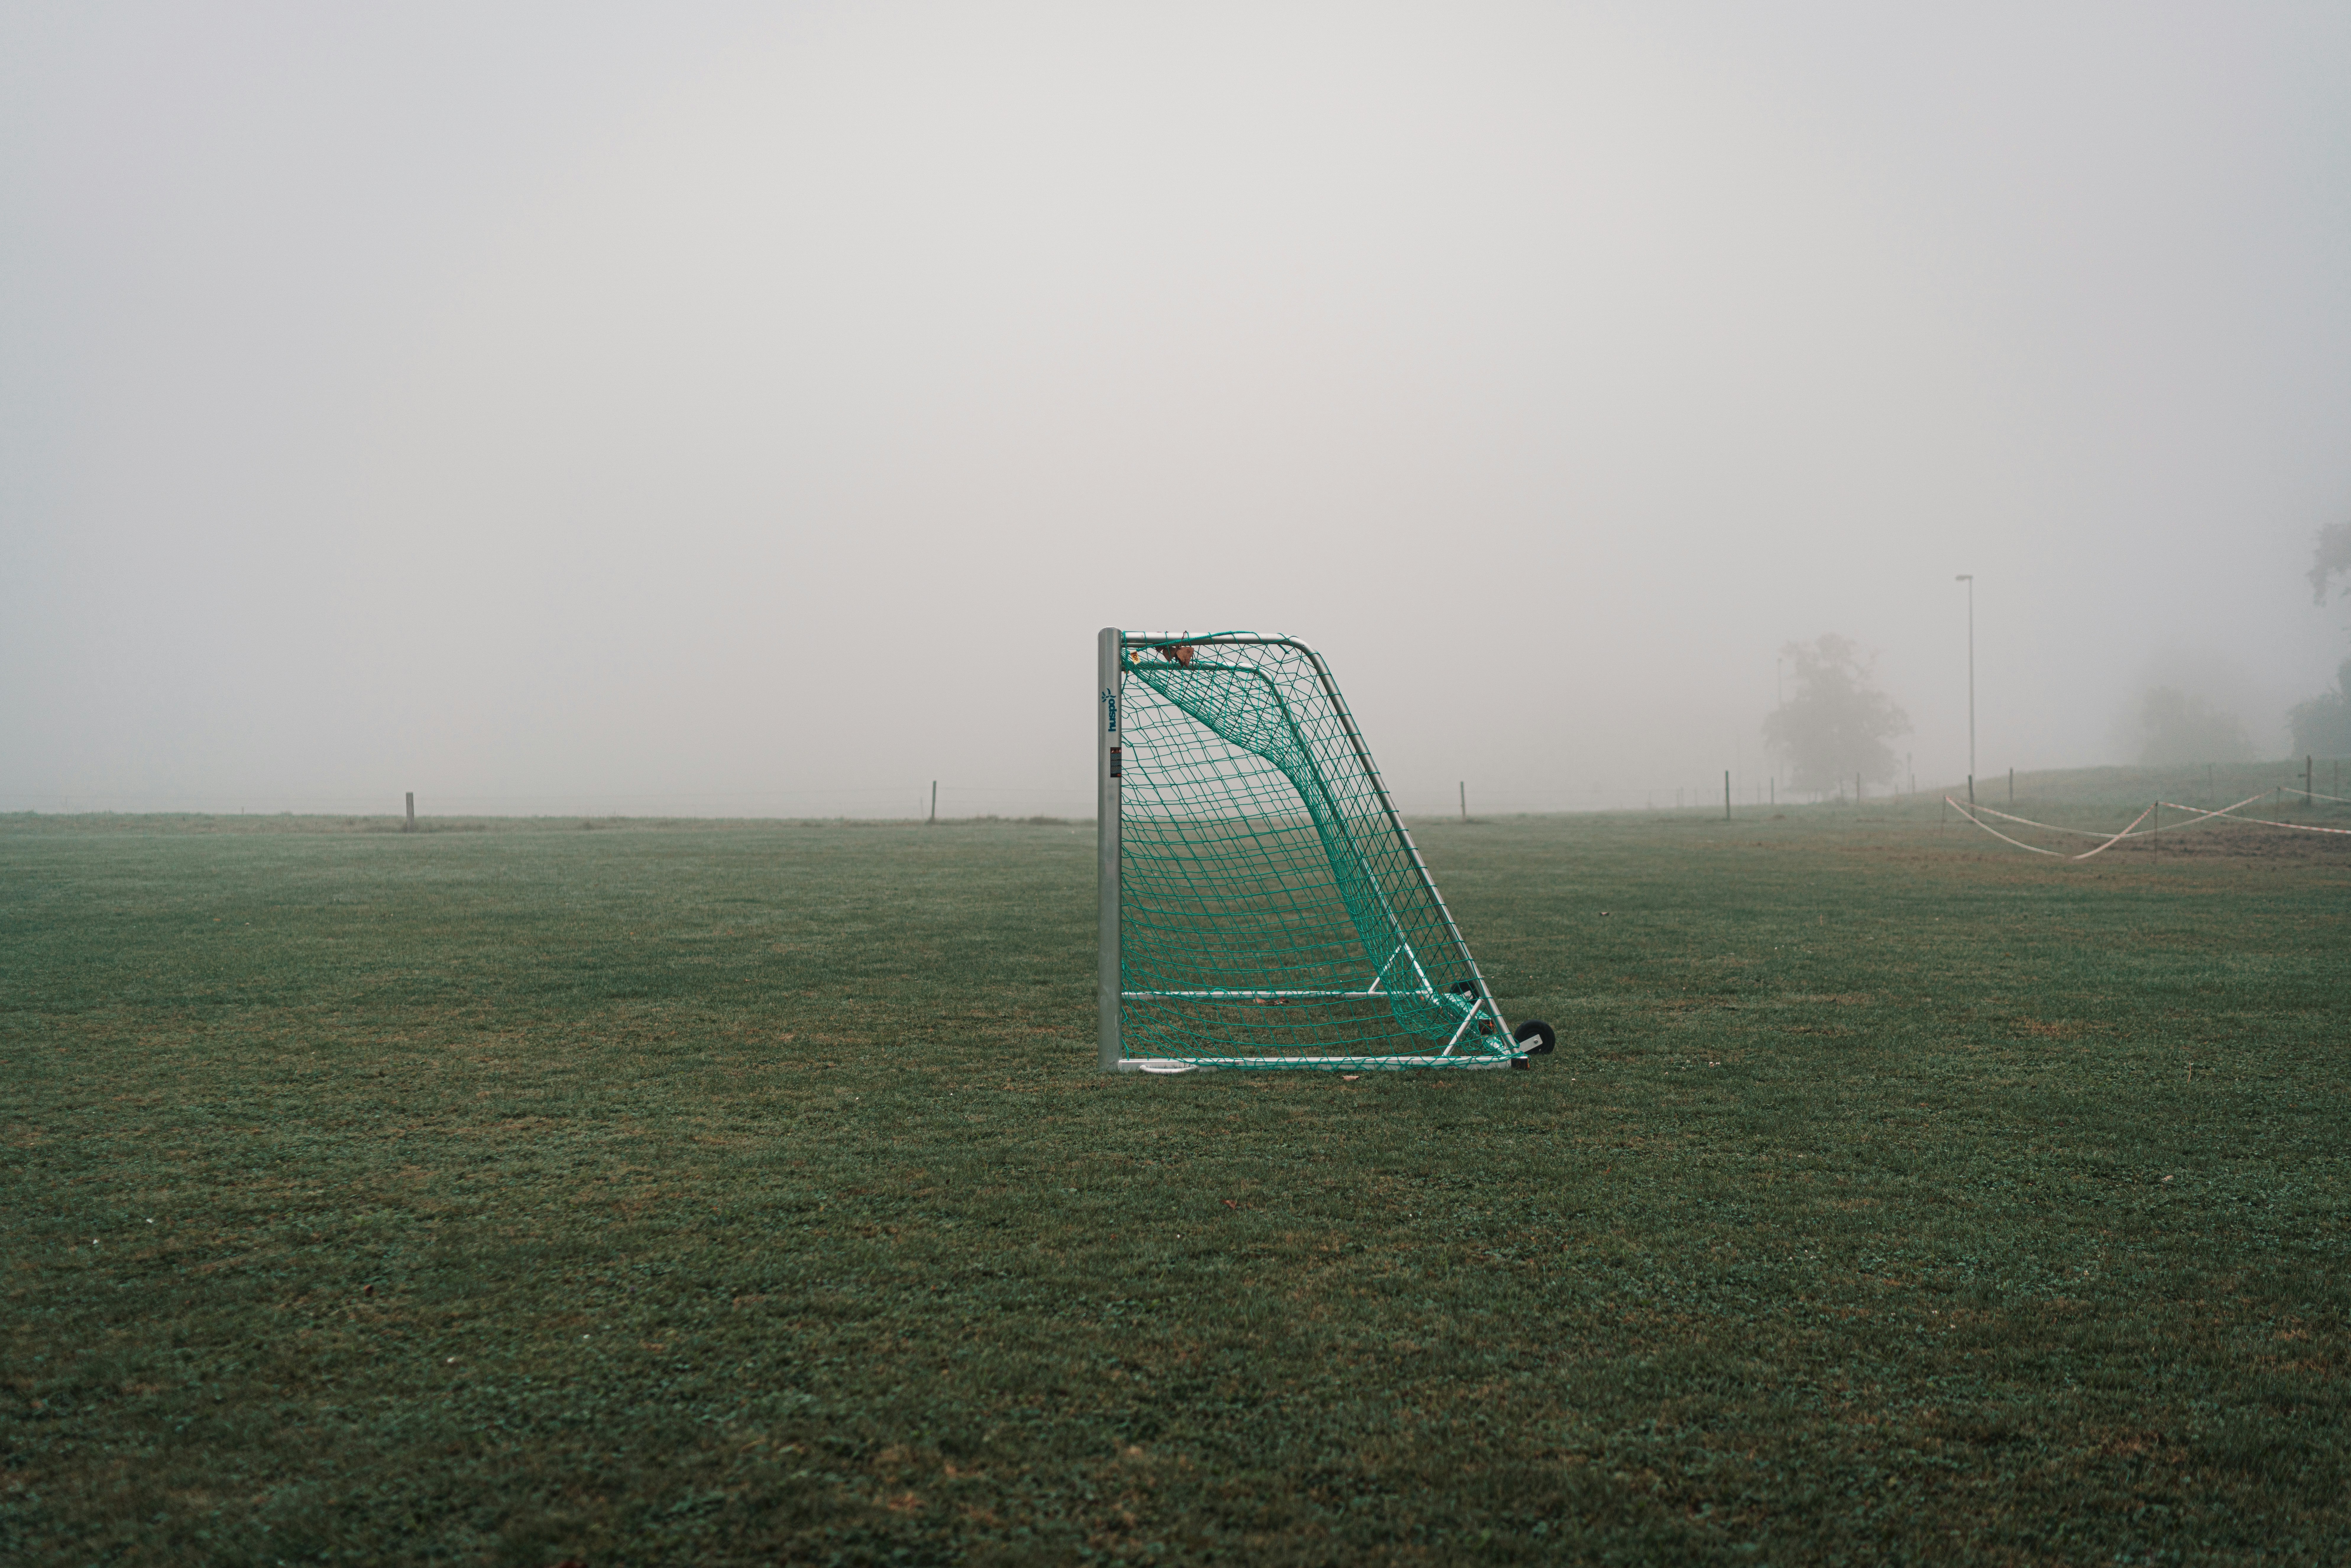 green and white soccer goal net on green grass field